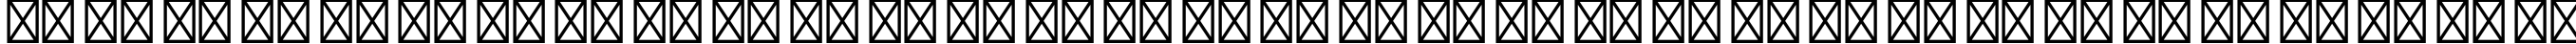 Пример написания русского алфавита шрифтом Nueva Std Condensed Italic